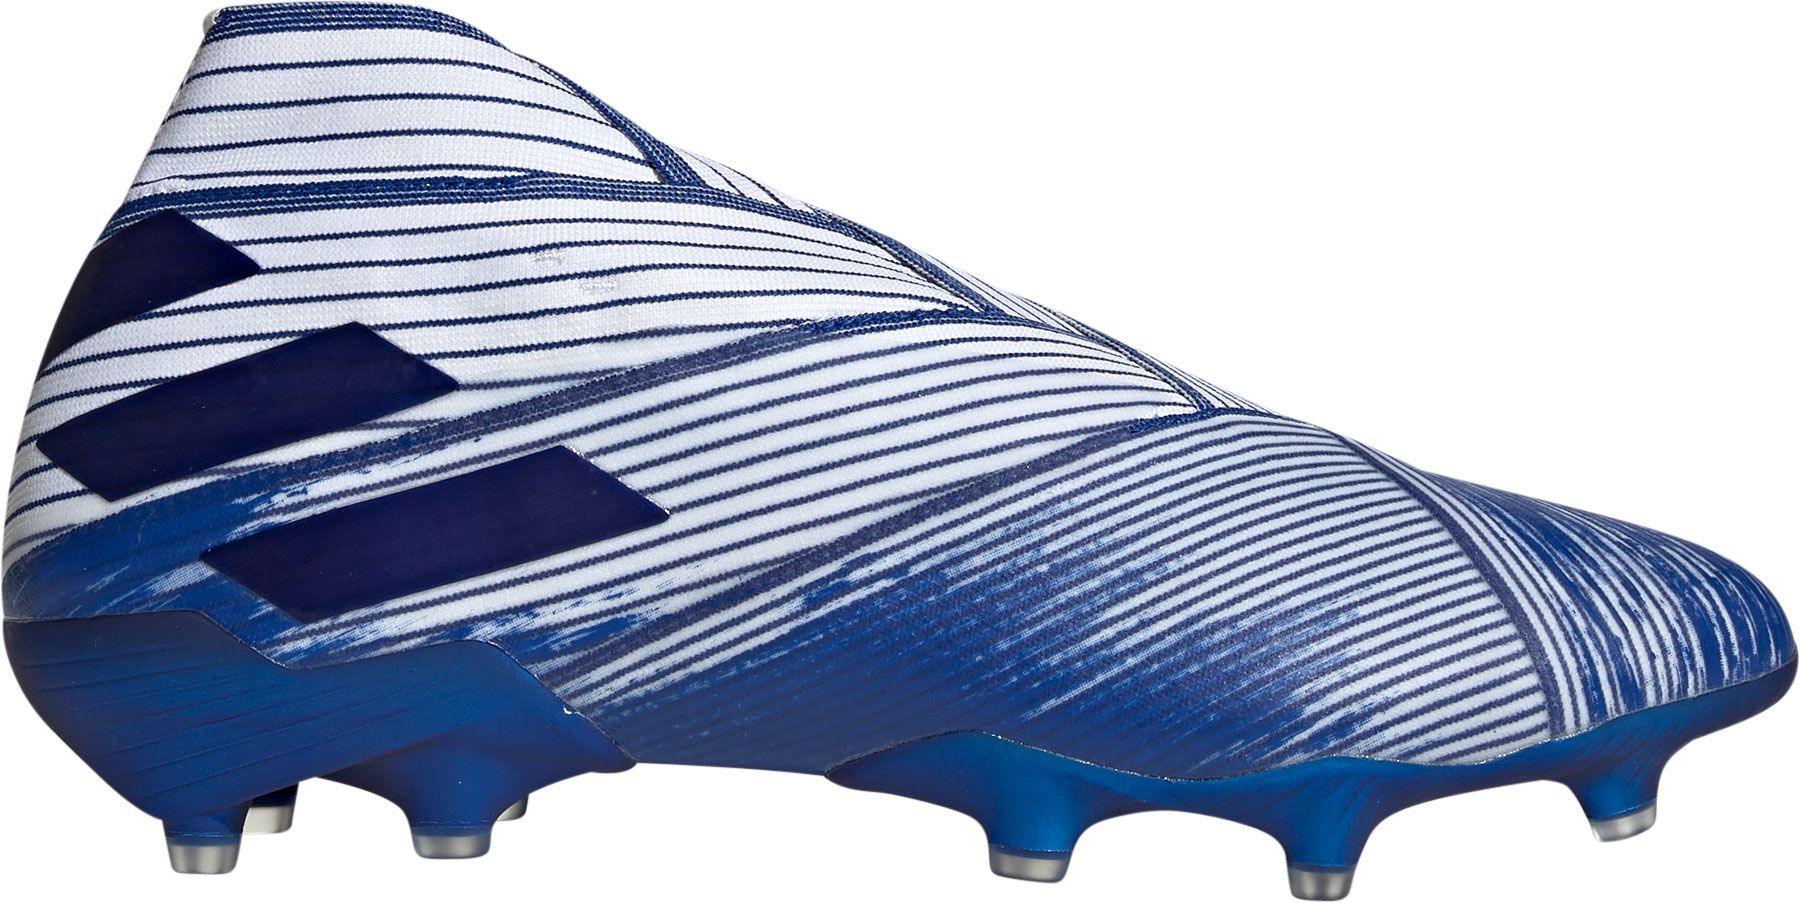 adidas nemeziz soccer boots